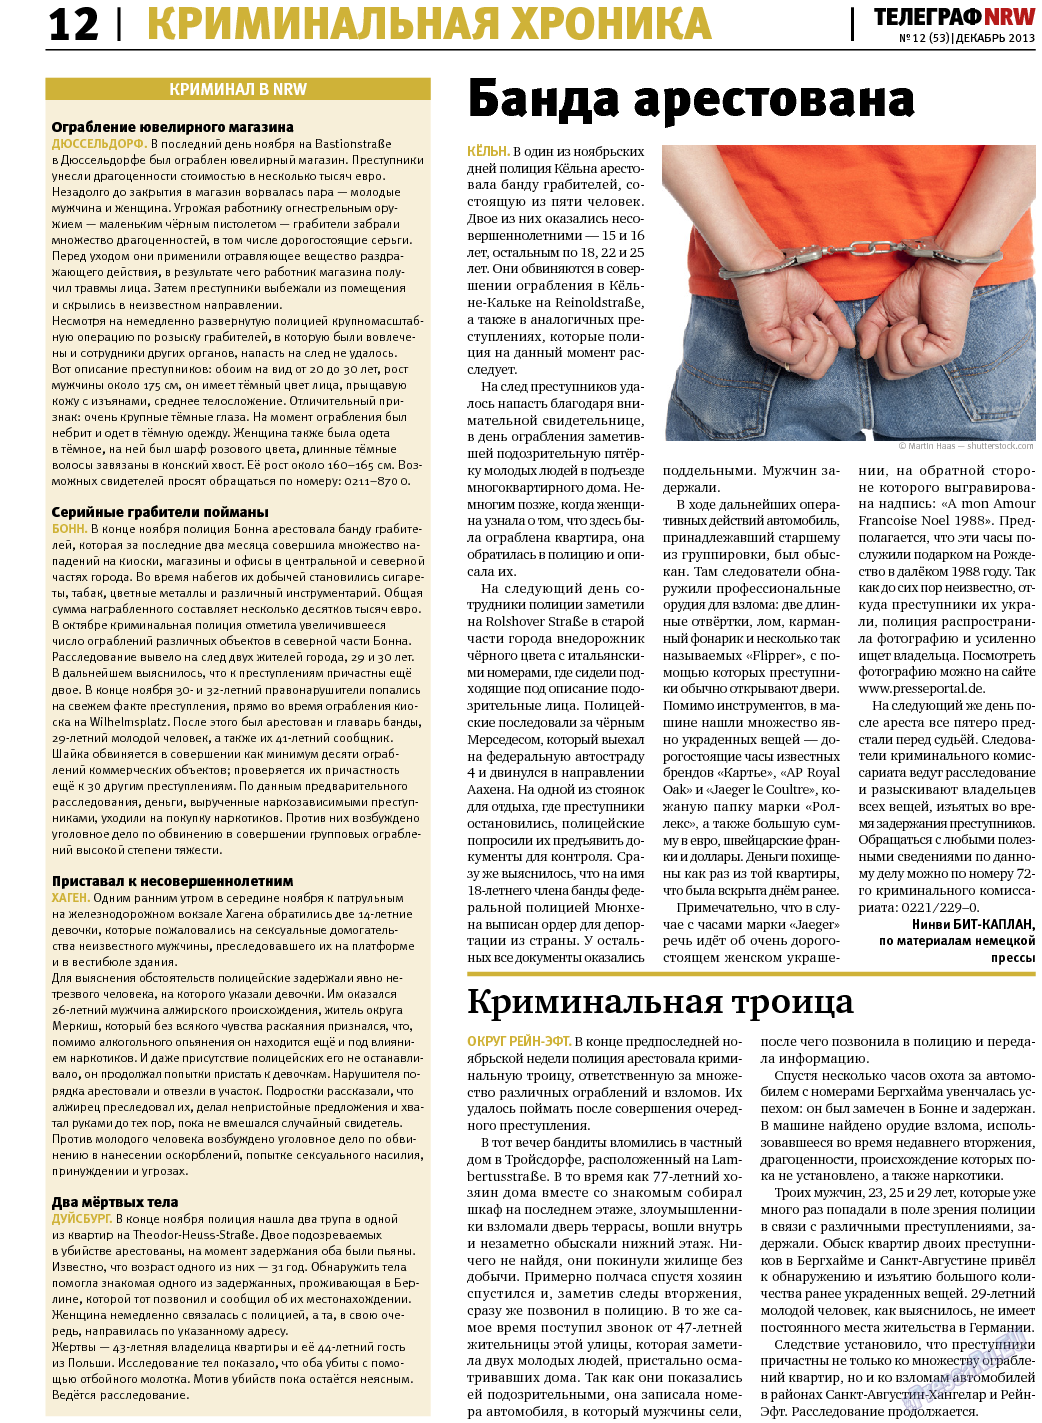 Телеграф NRW, газета. 2013 №12 стр.12